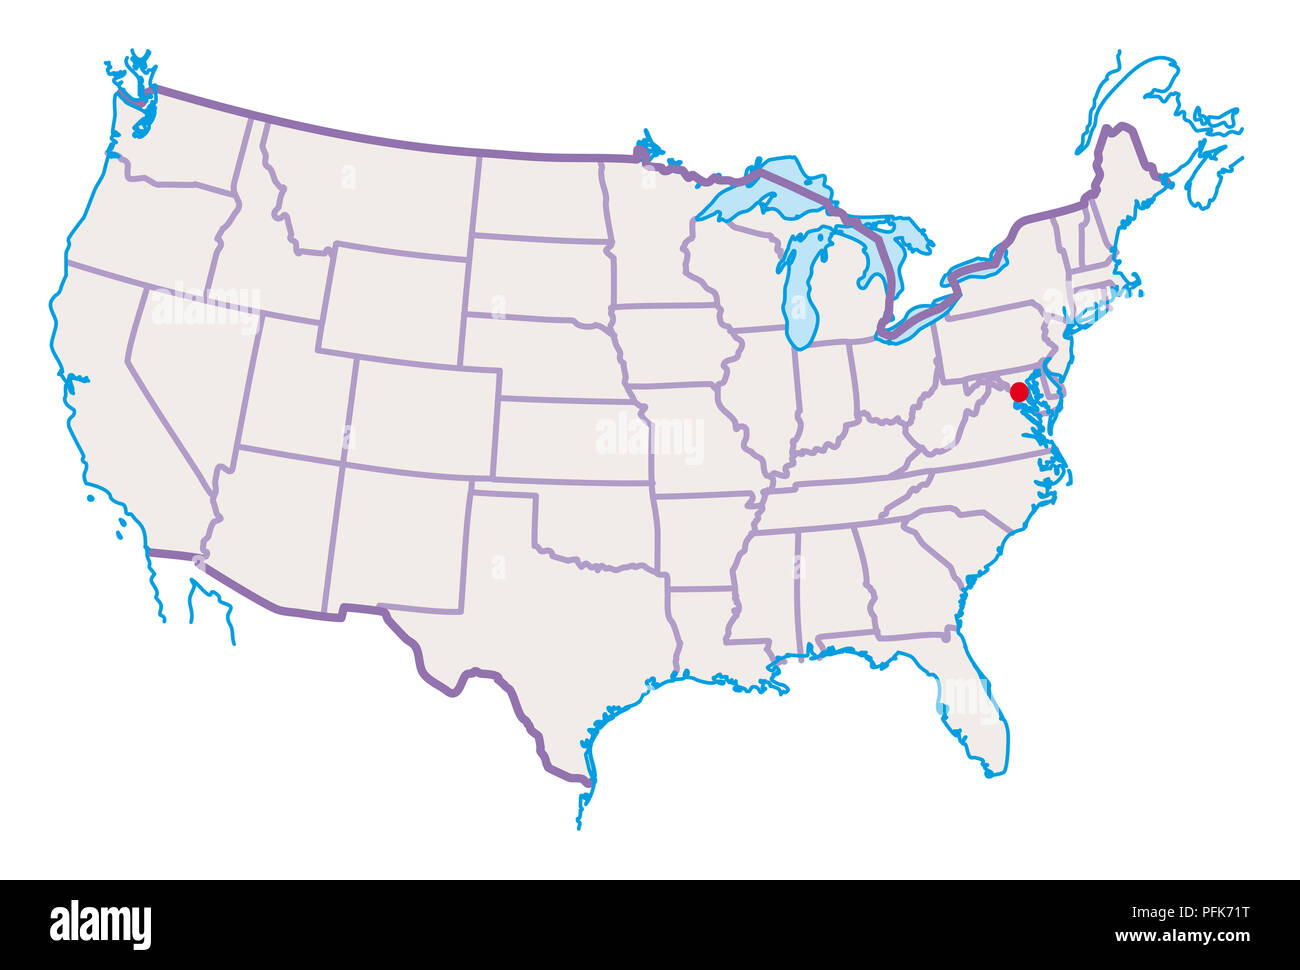 Mapa de EE.UU., Washington, D.C., resaltada en rojo Foto de stock